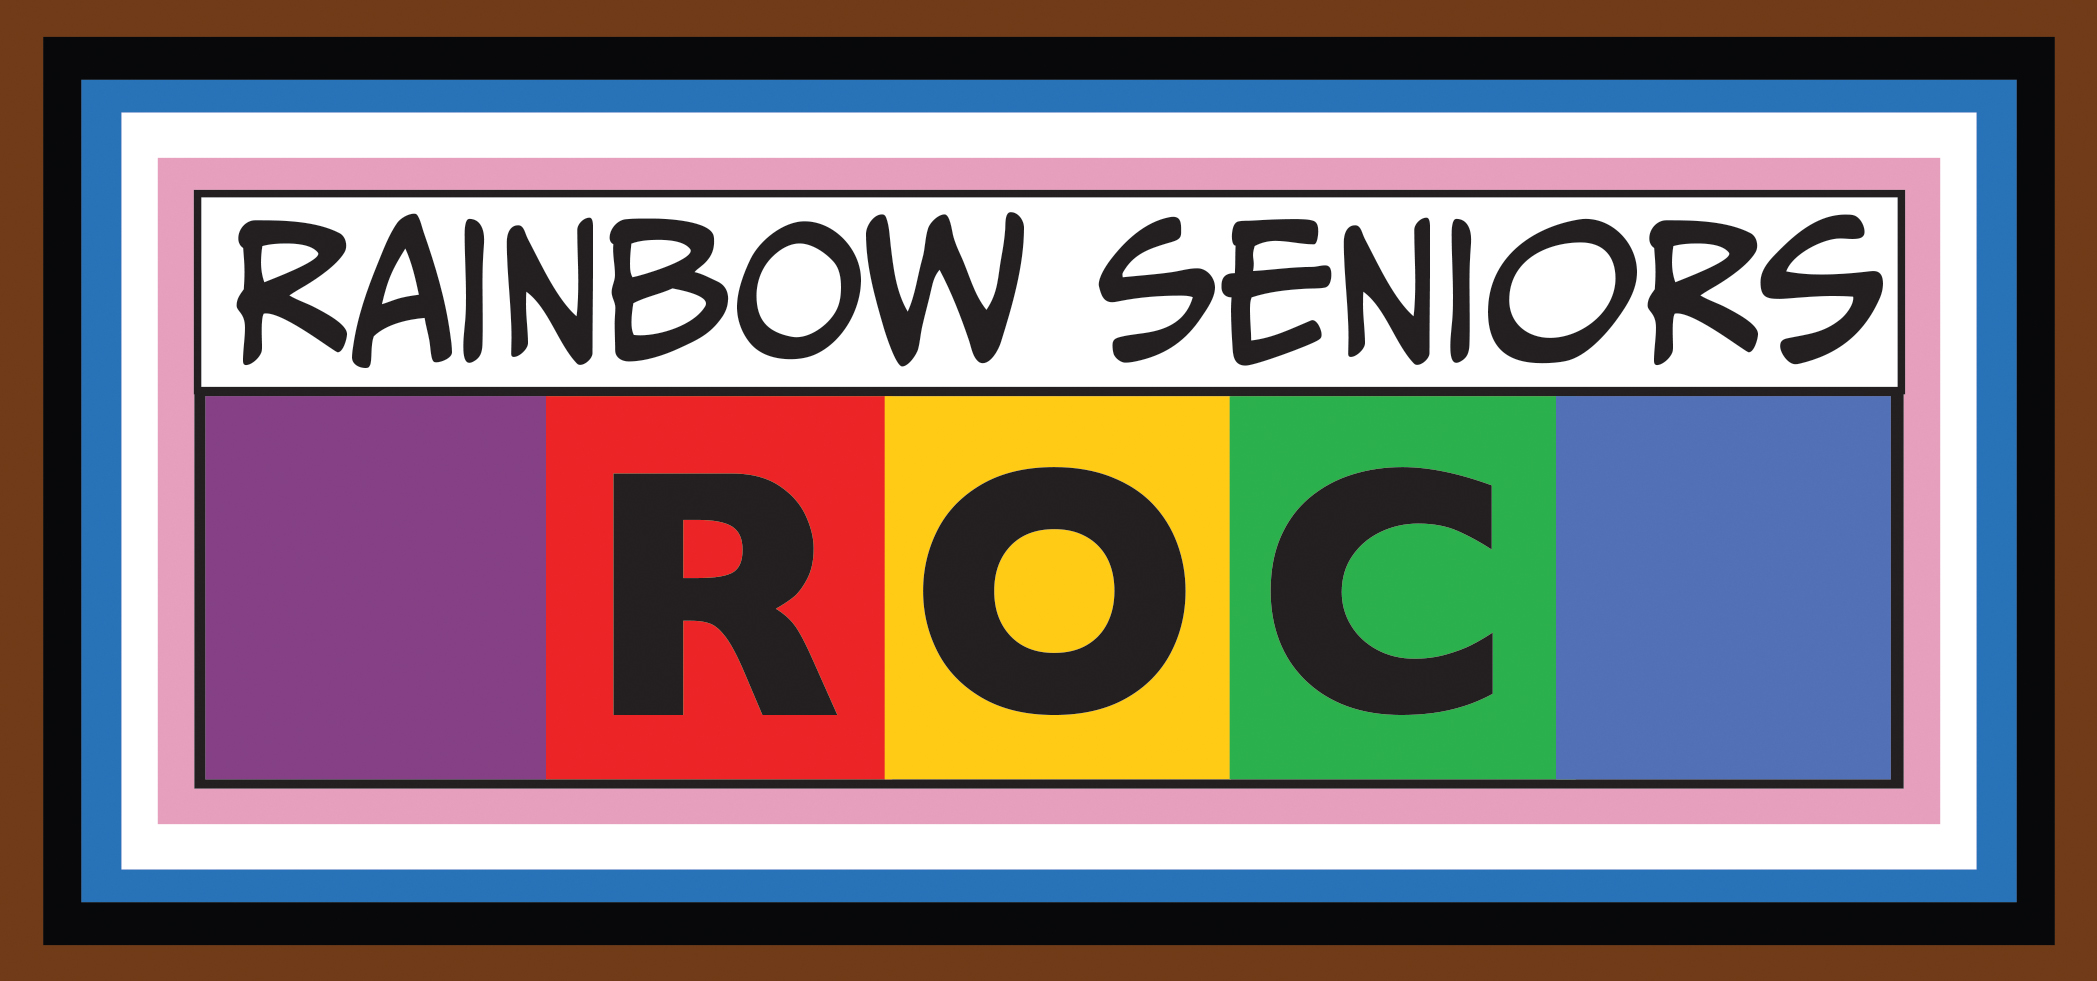 Rainbow Seniors ROC, Inc.